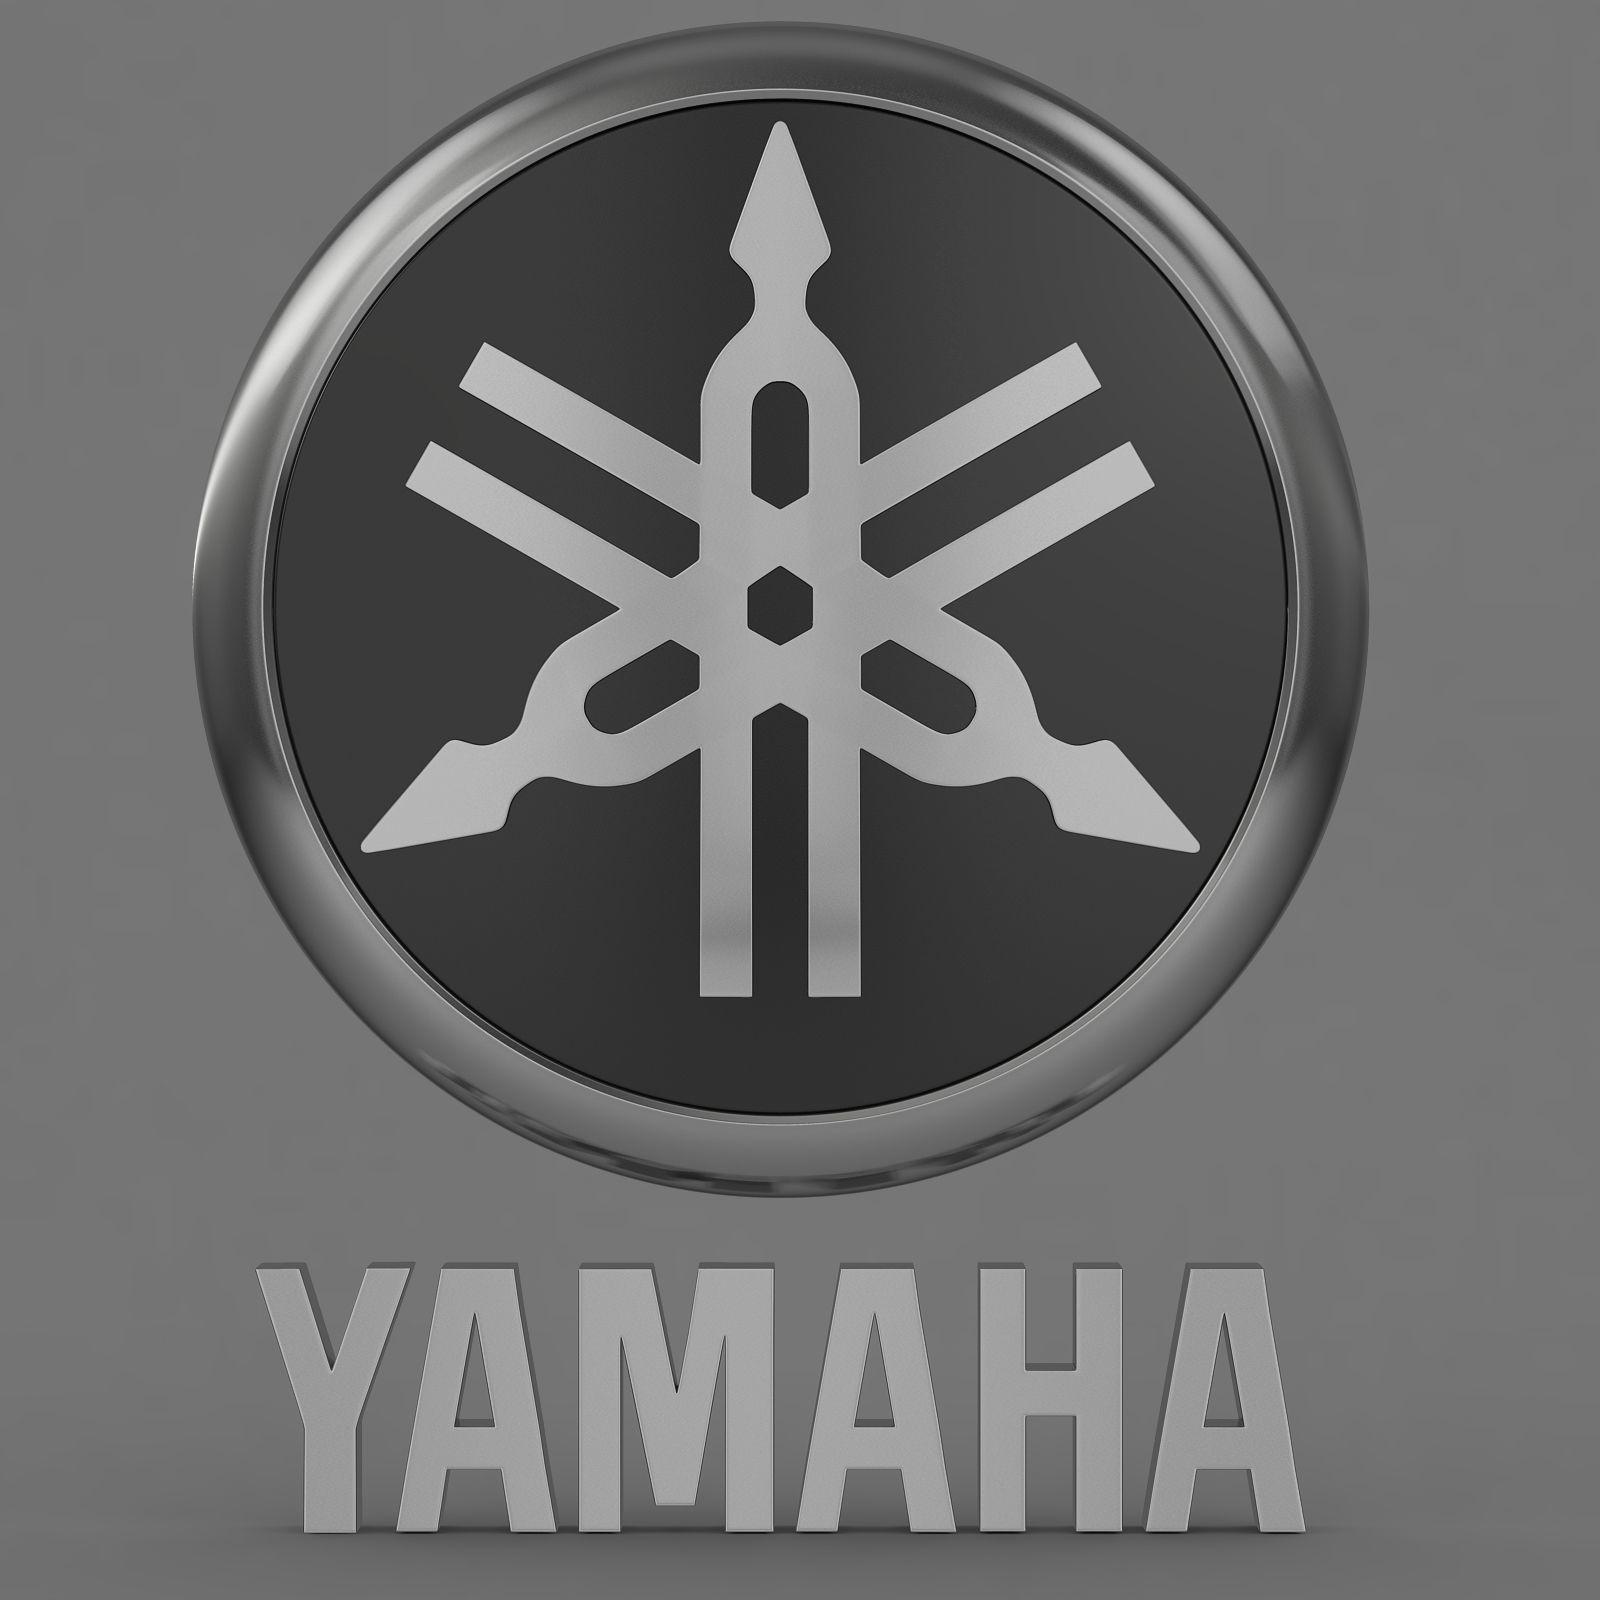 Cool Yamaha Logo - yamaha logo 2 3D logotype | CGTrader